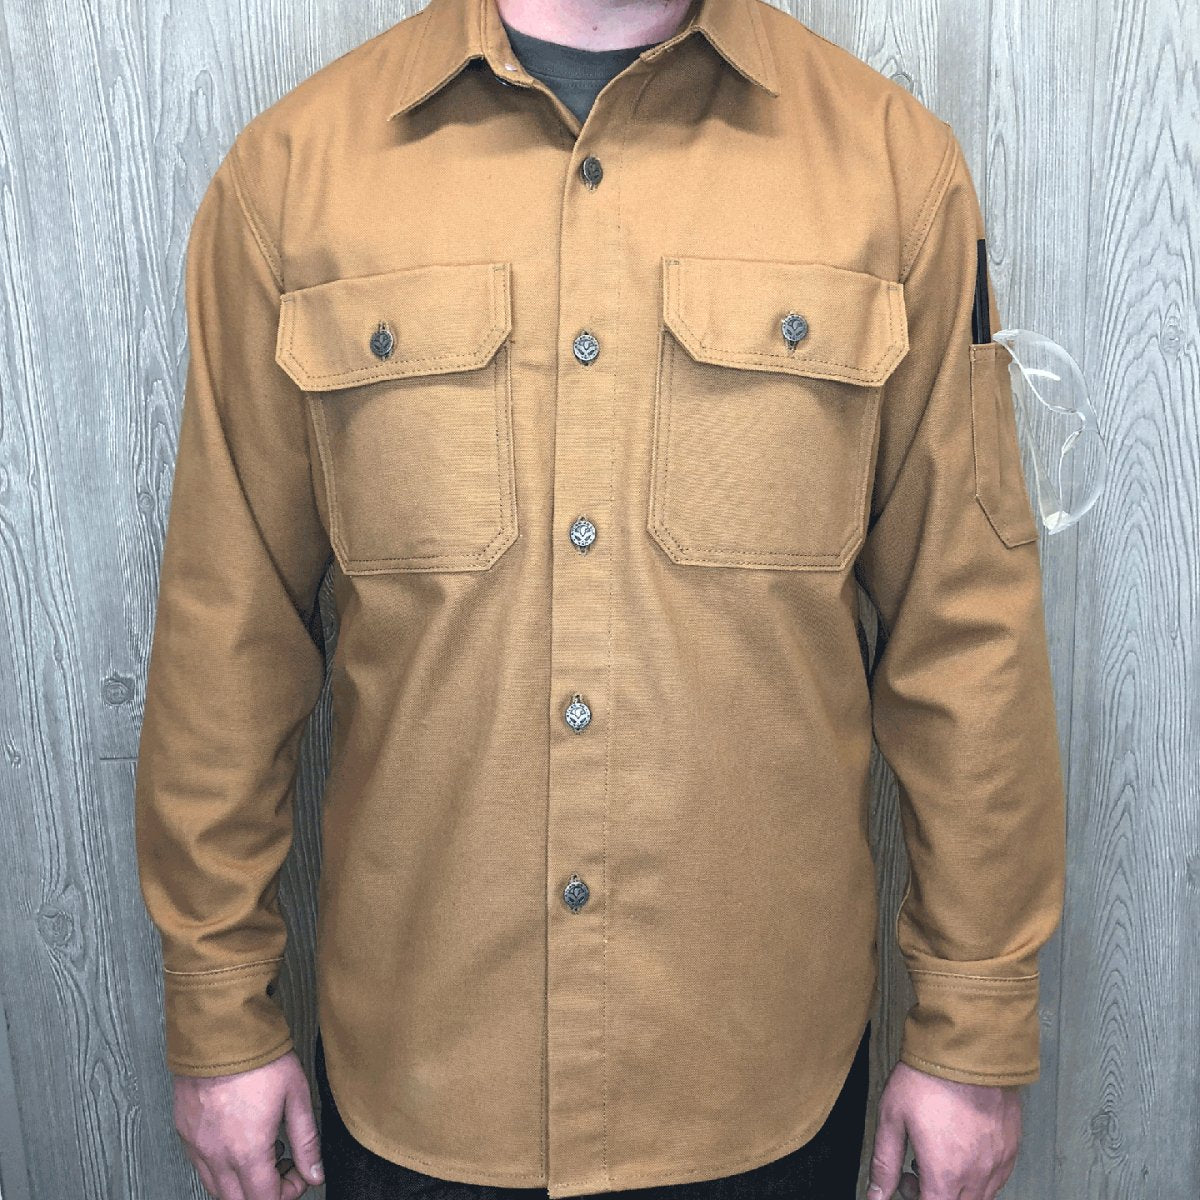 Huntington Layering Work Shirt | Atlas46 | A247 Gear